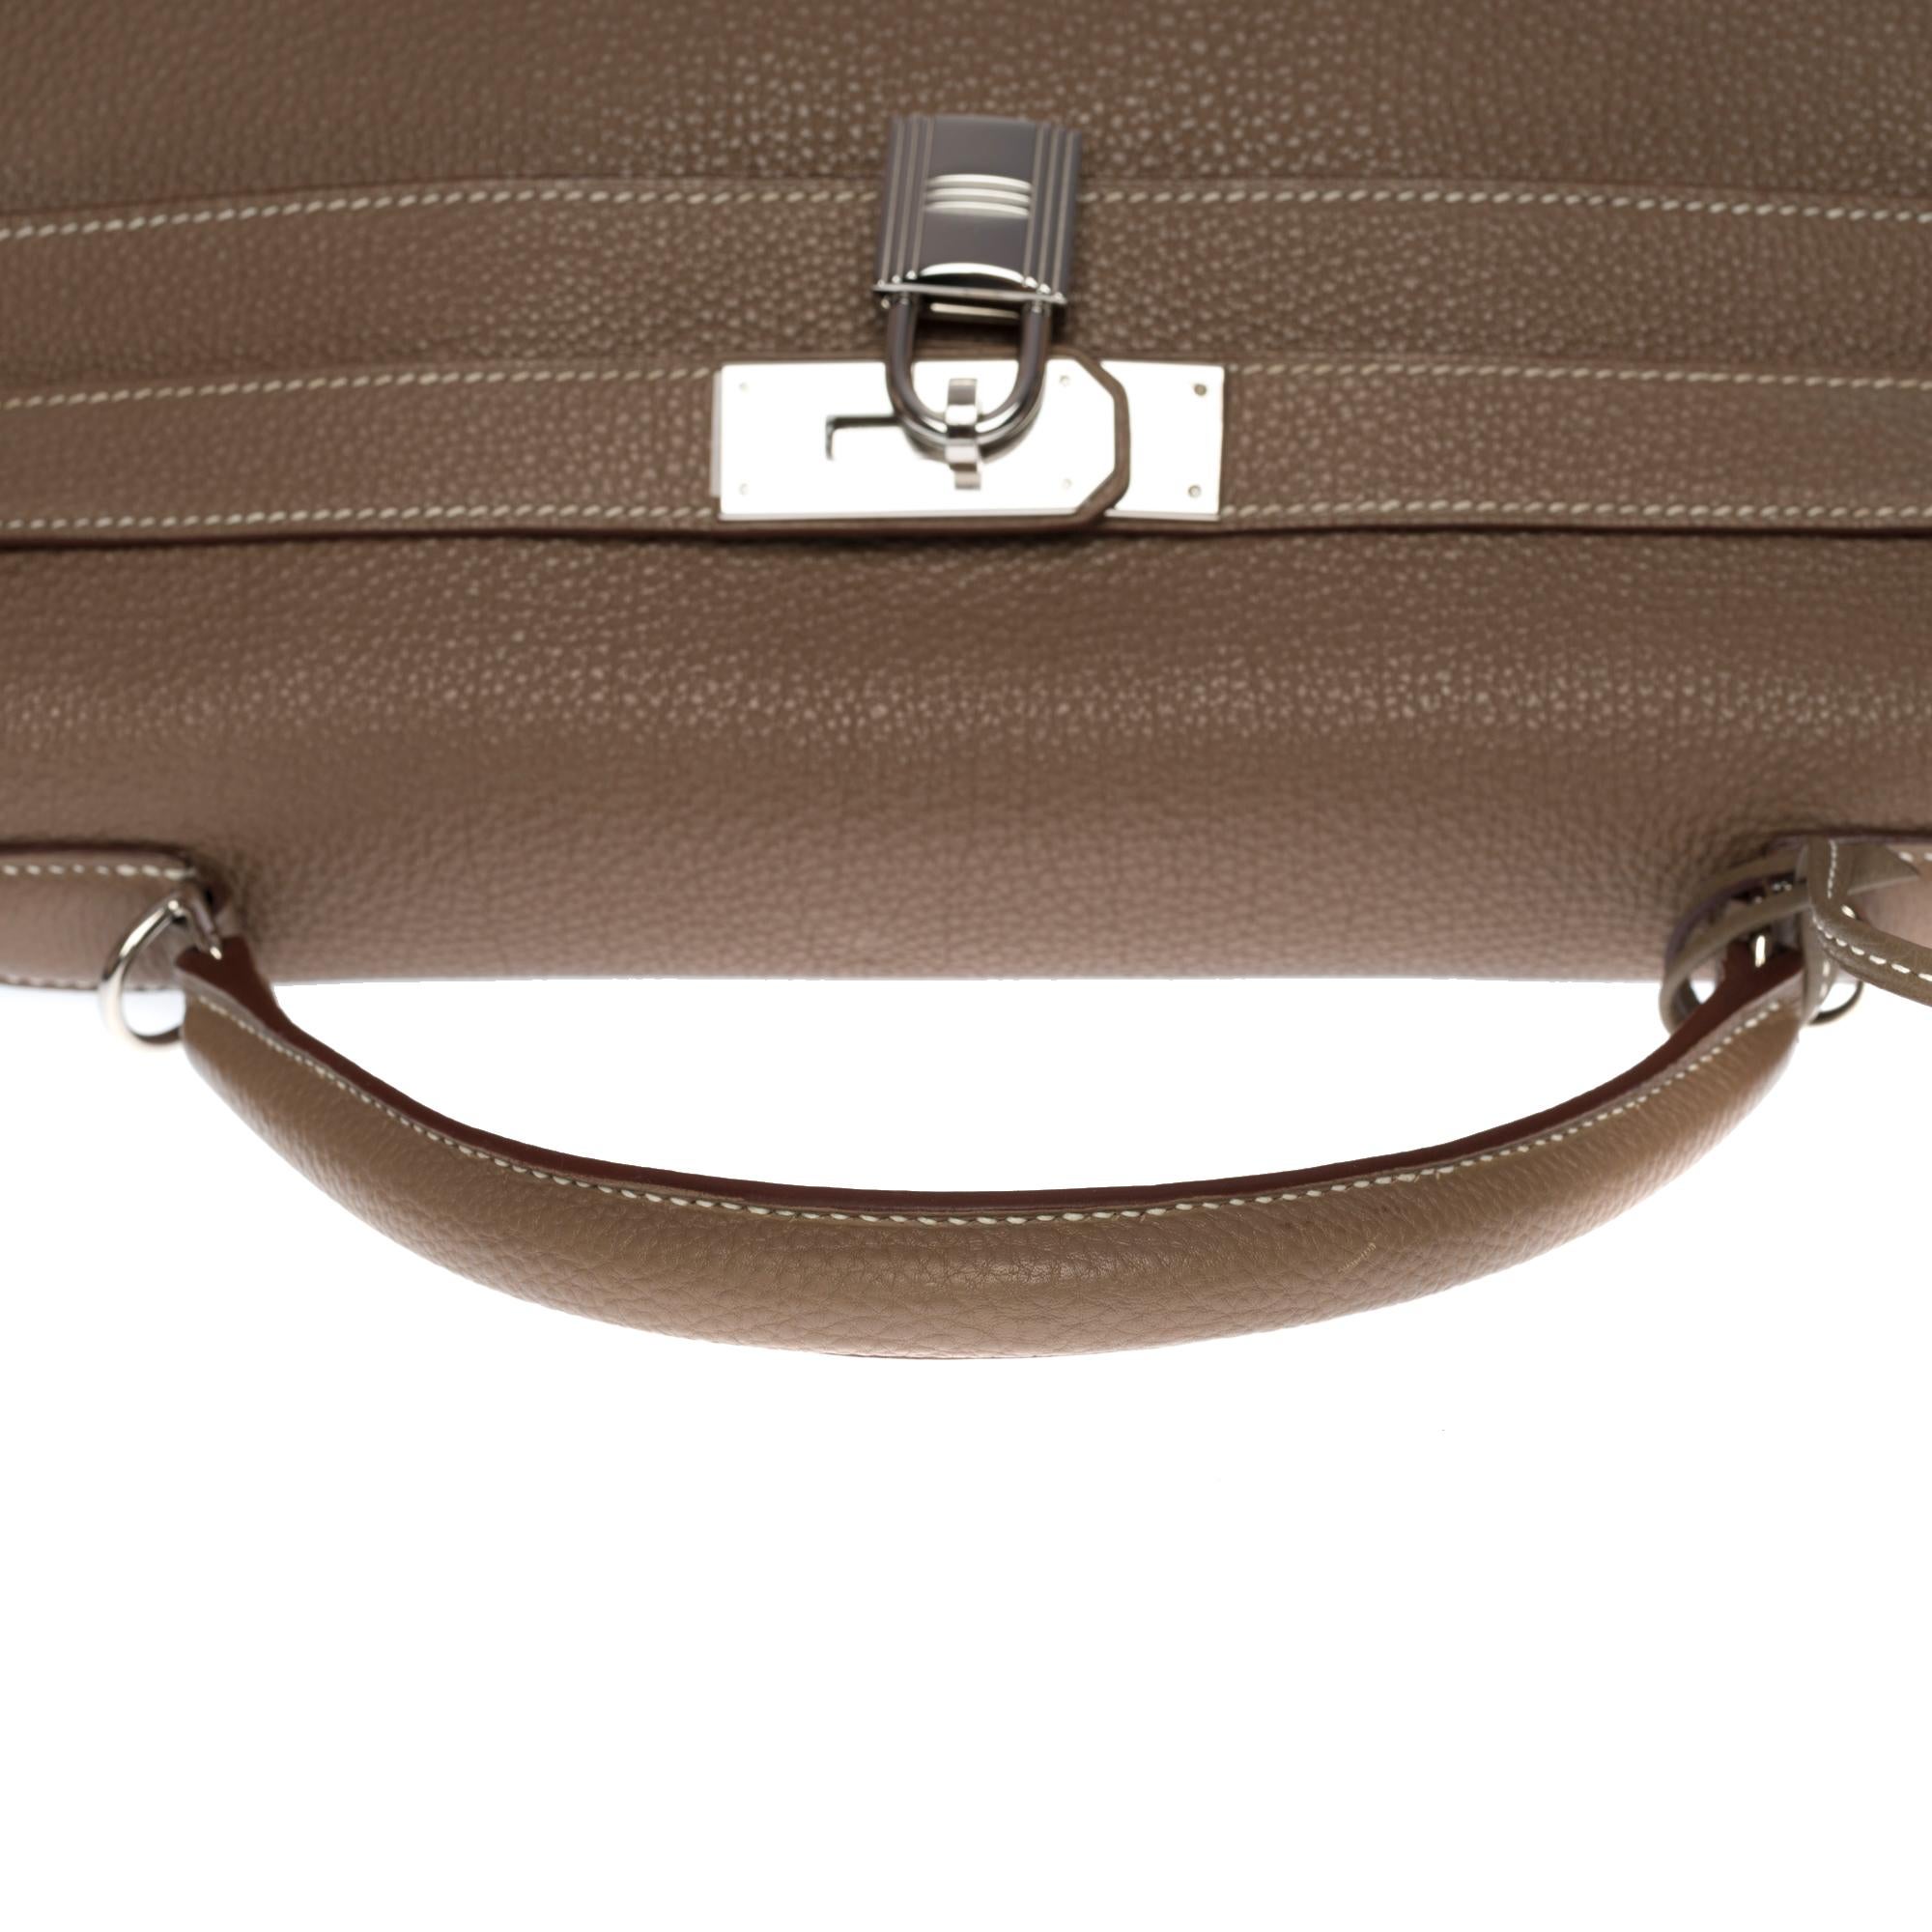 Women's Hermes Kelly 40 retourne handbag strap in Togo etoupe leather, SHW